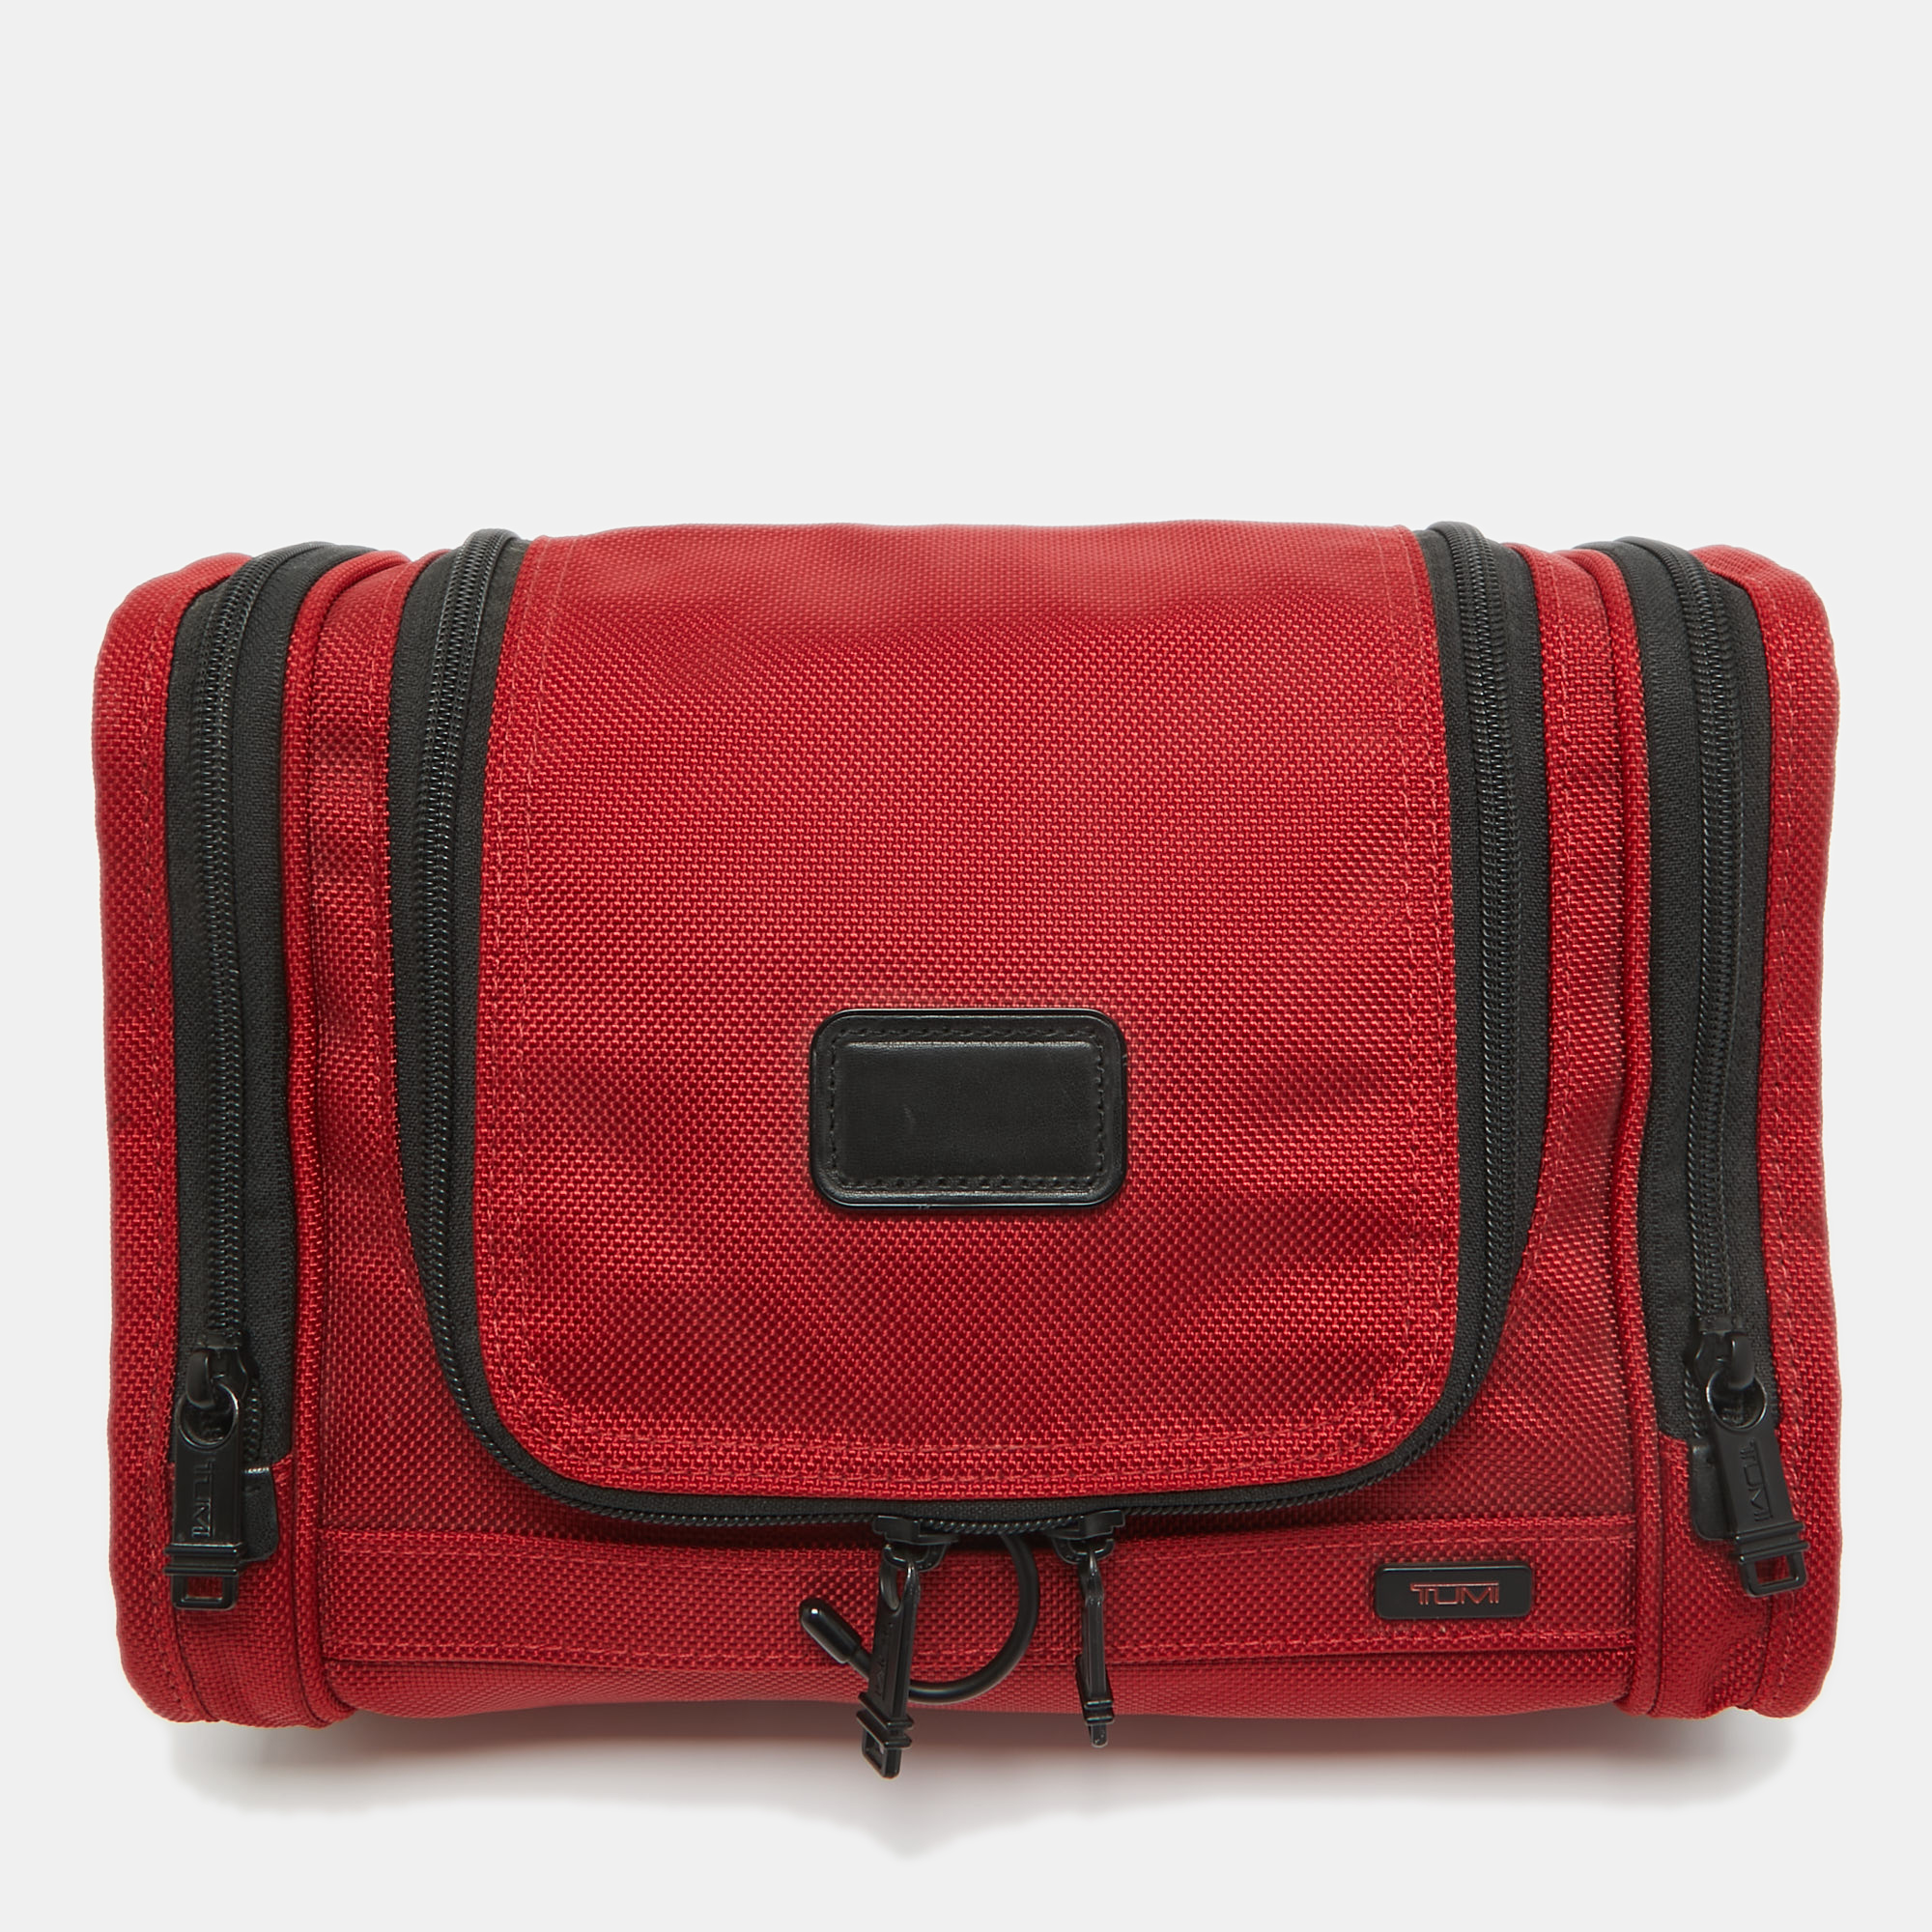 Tumi red/black nylon hanging travel kit